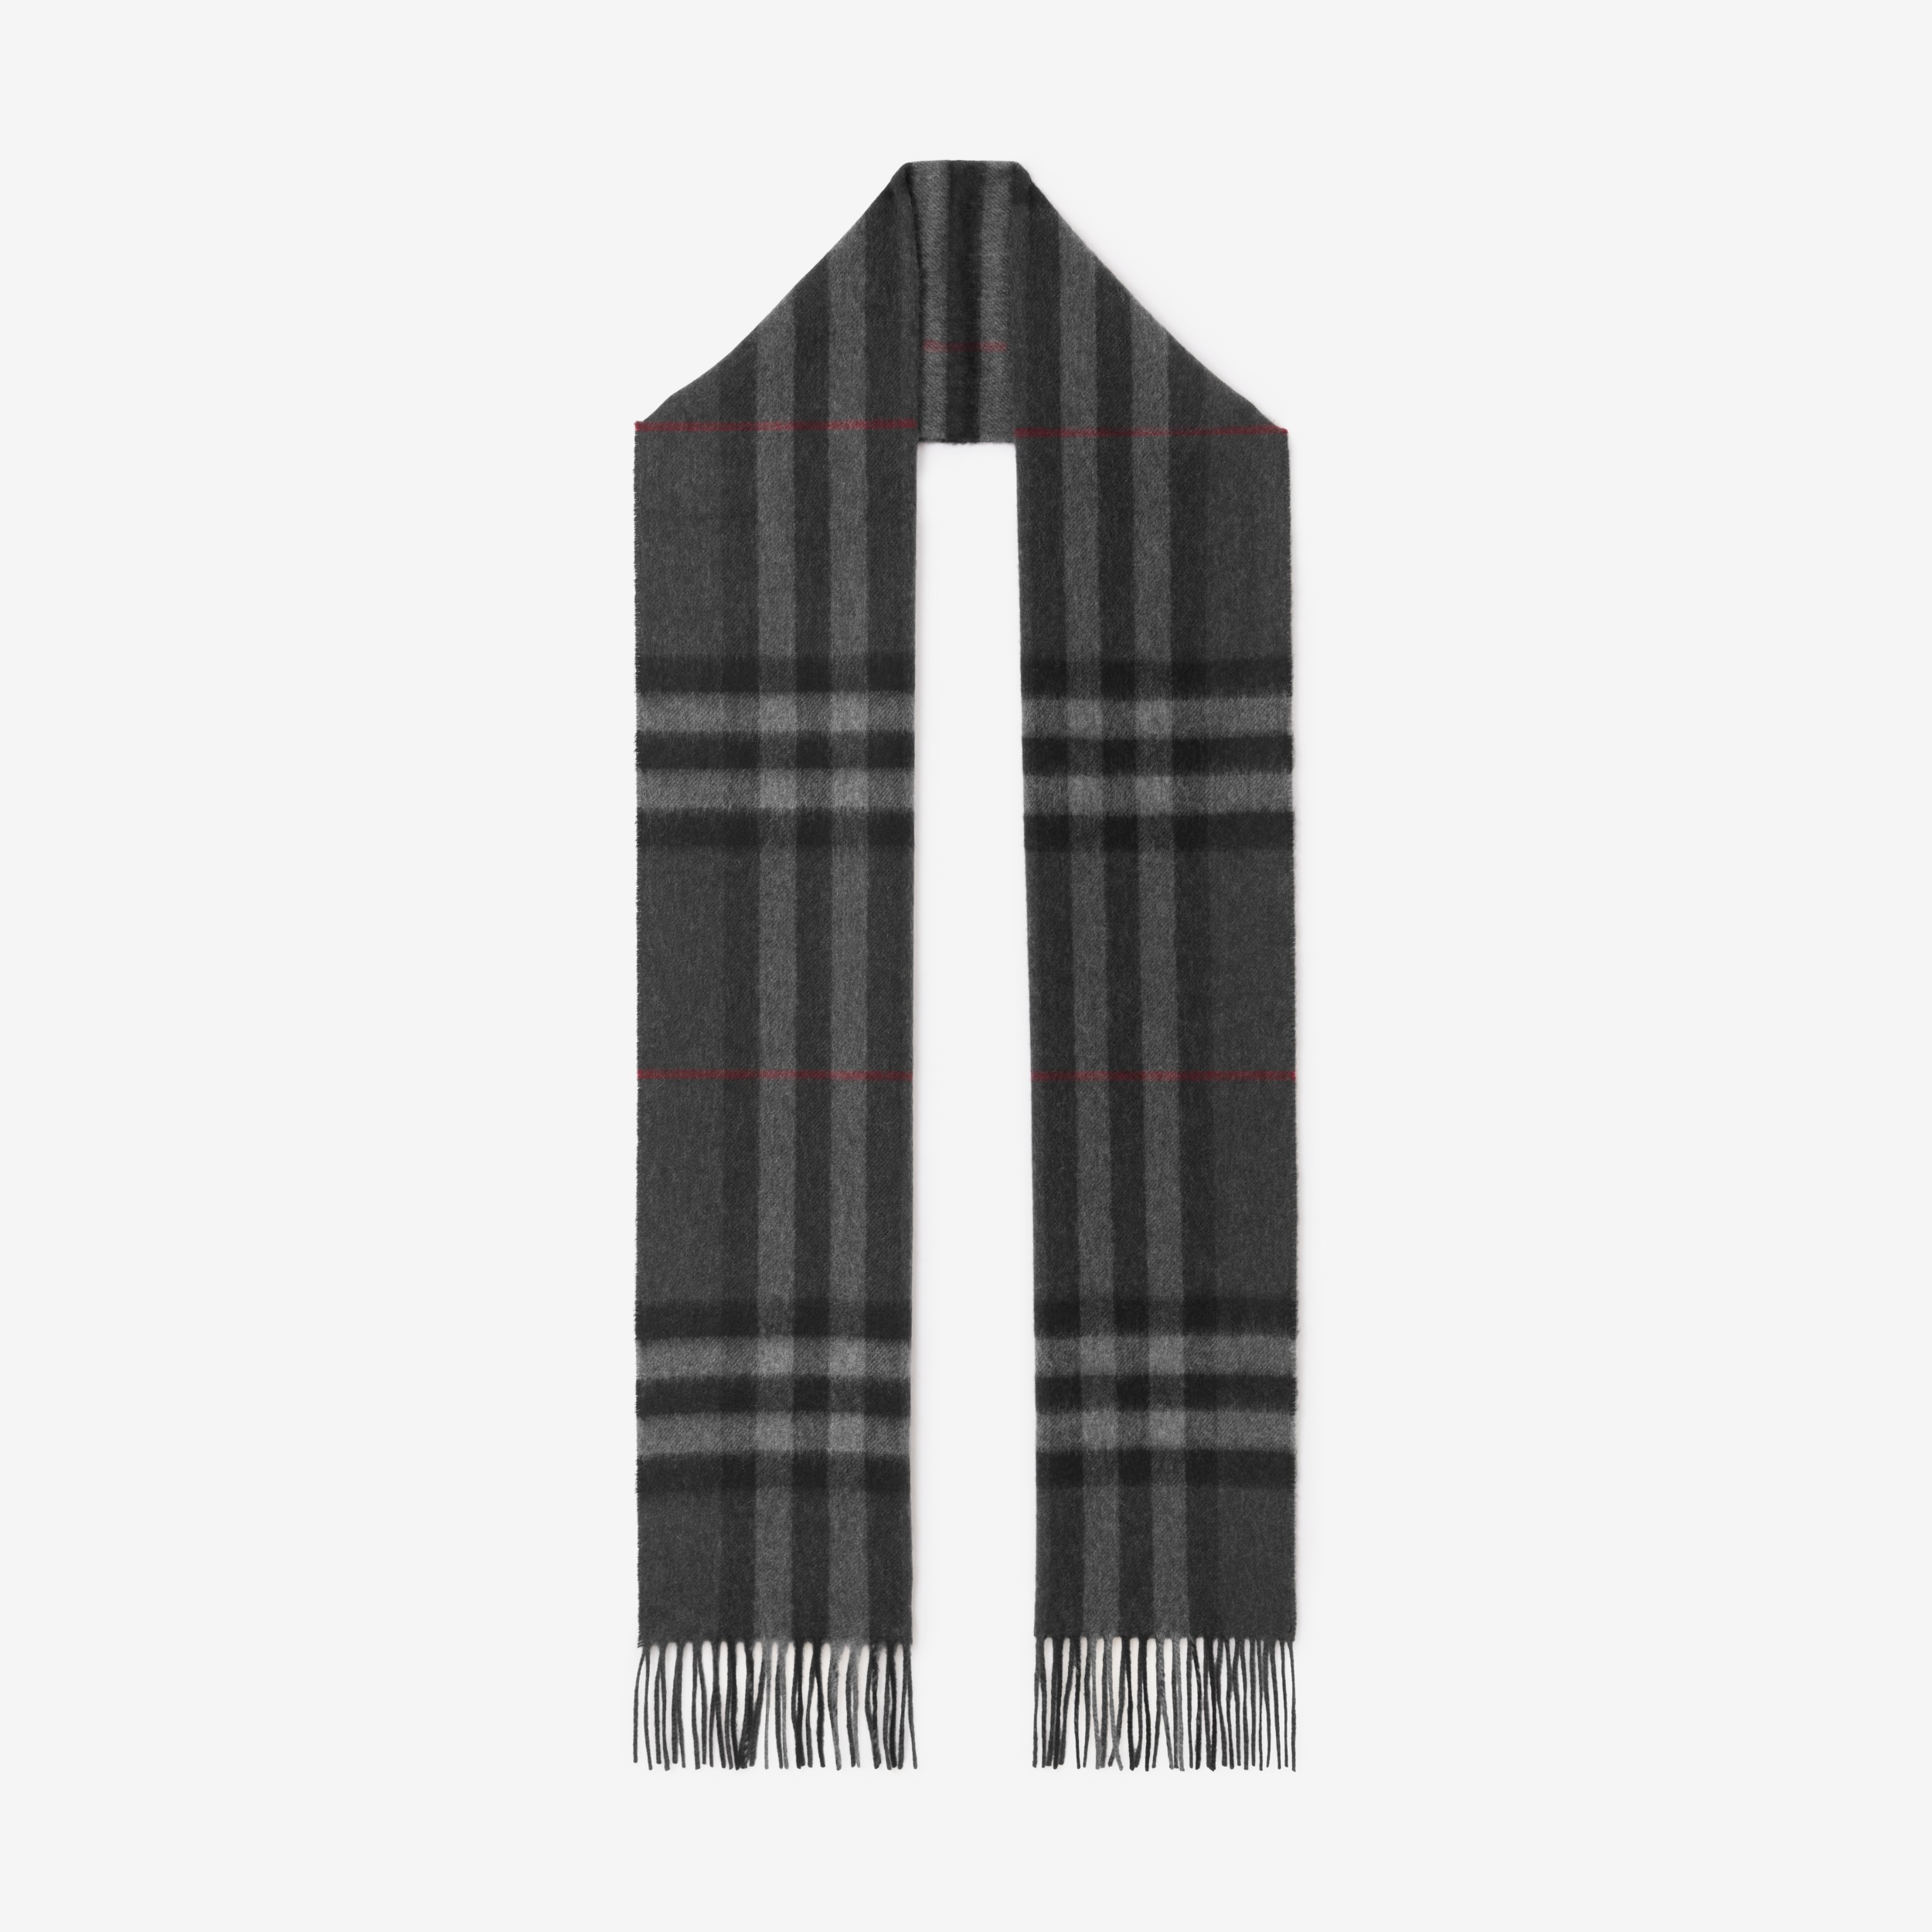 Arriba 31+ imagen burberry charcoal scarf